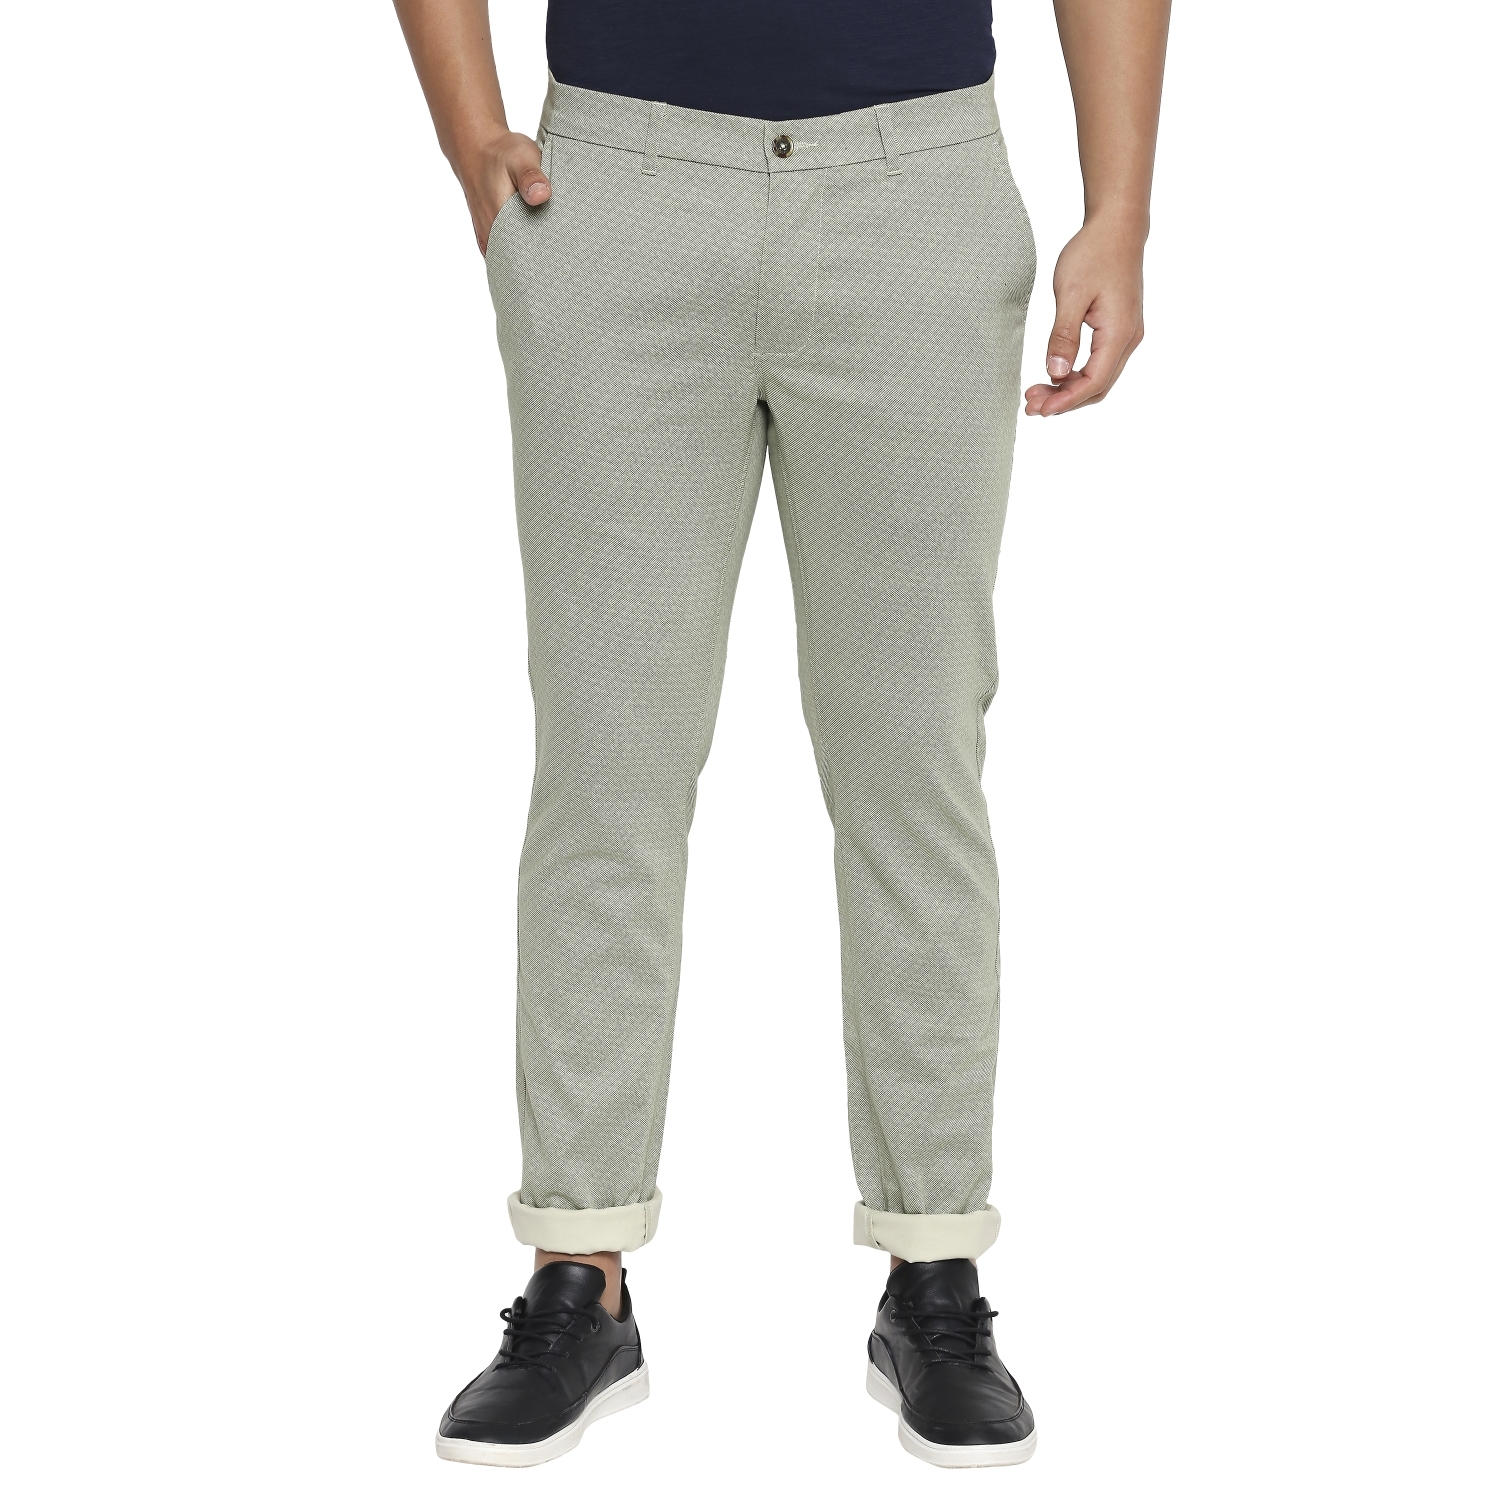 Basics | Basics Tapered Fit Aspen Green Stretch Trouser